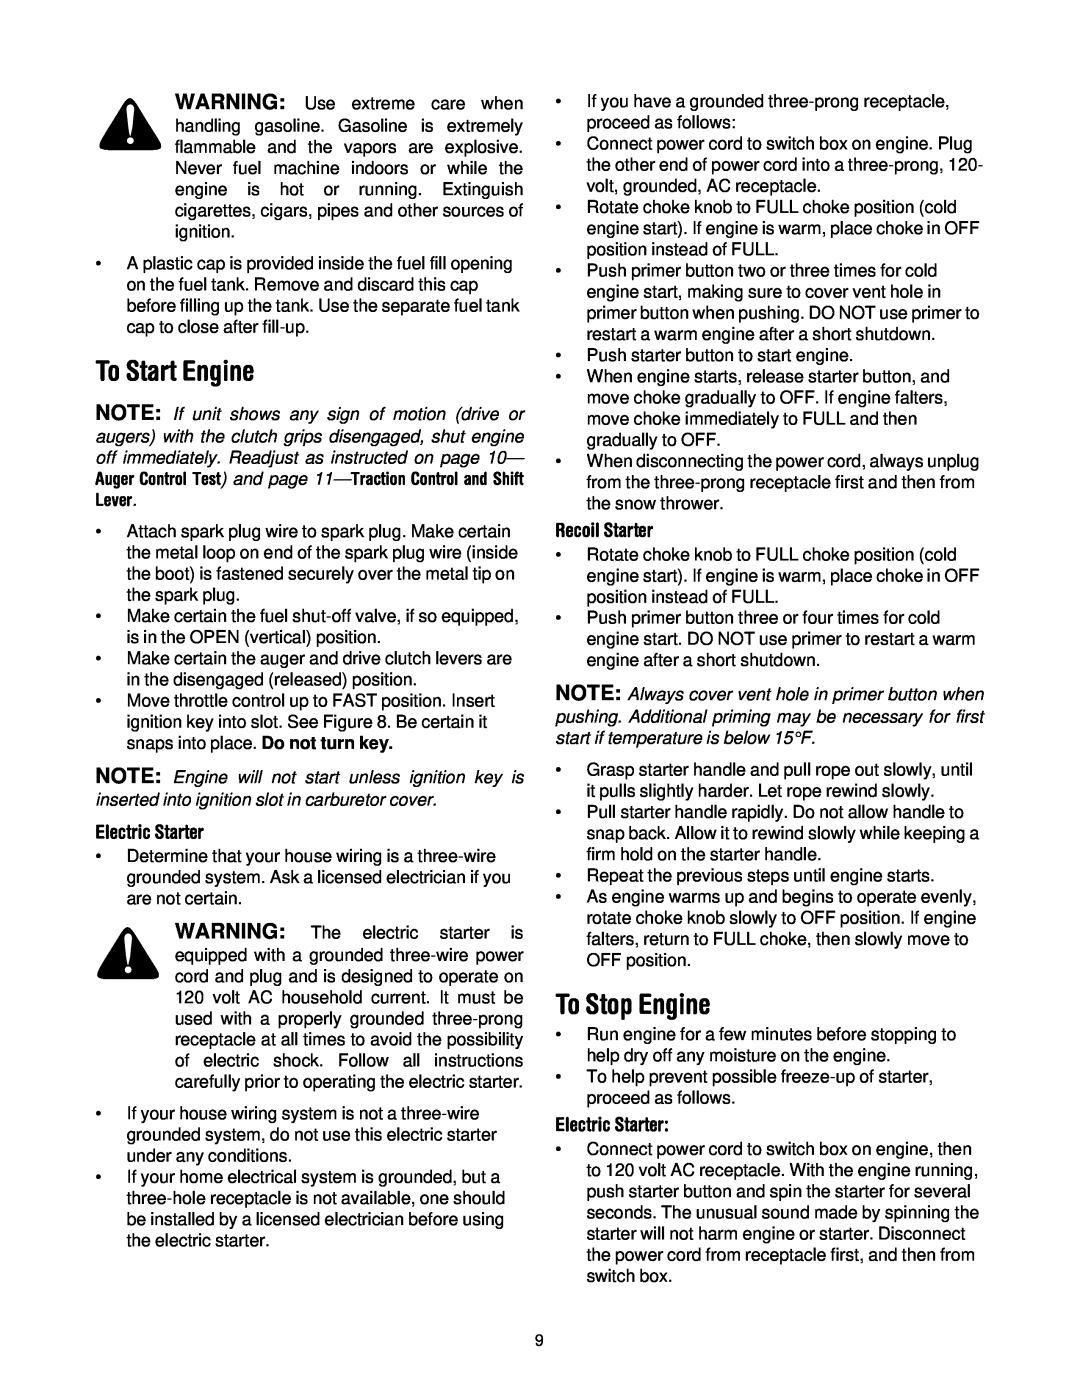 Troy-Bilt 13045 manual To Start Engine, To Stop Engine, Electric Starter, Recoil Starter 